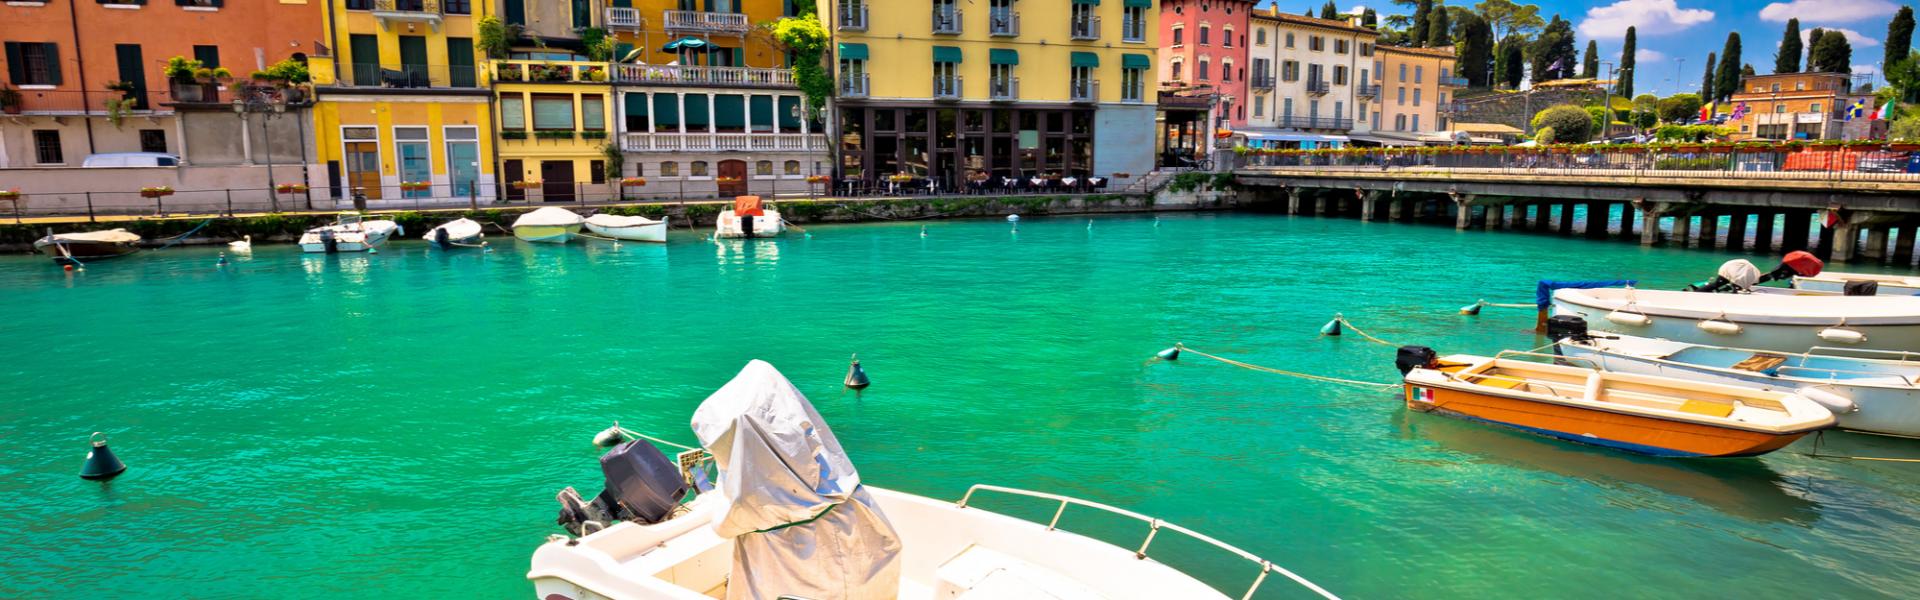 Find the ideal holiday home in Peschiera del Garda for your Italian adventure - Casamundo